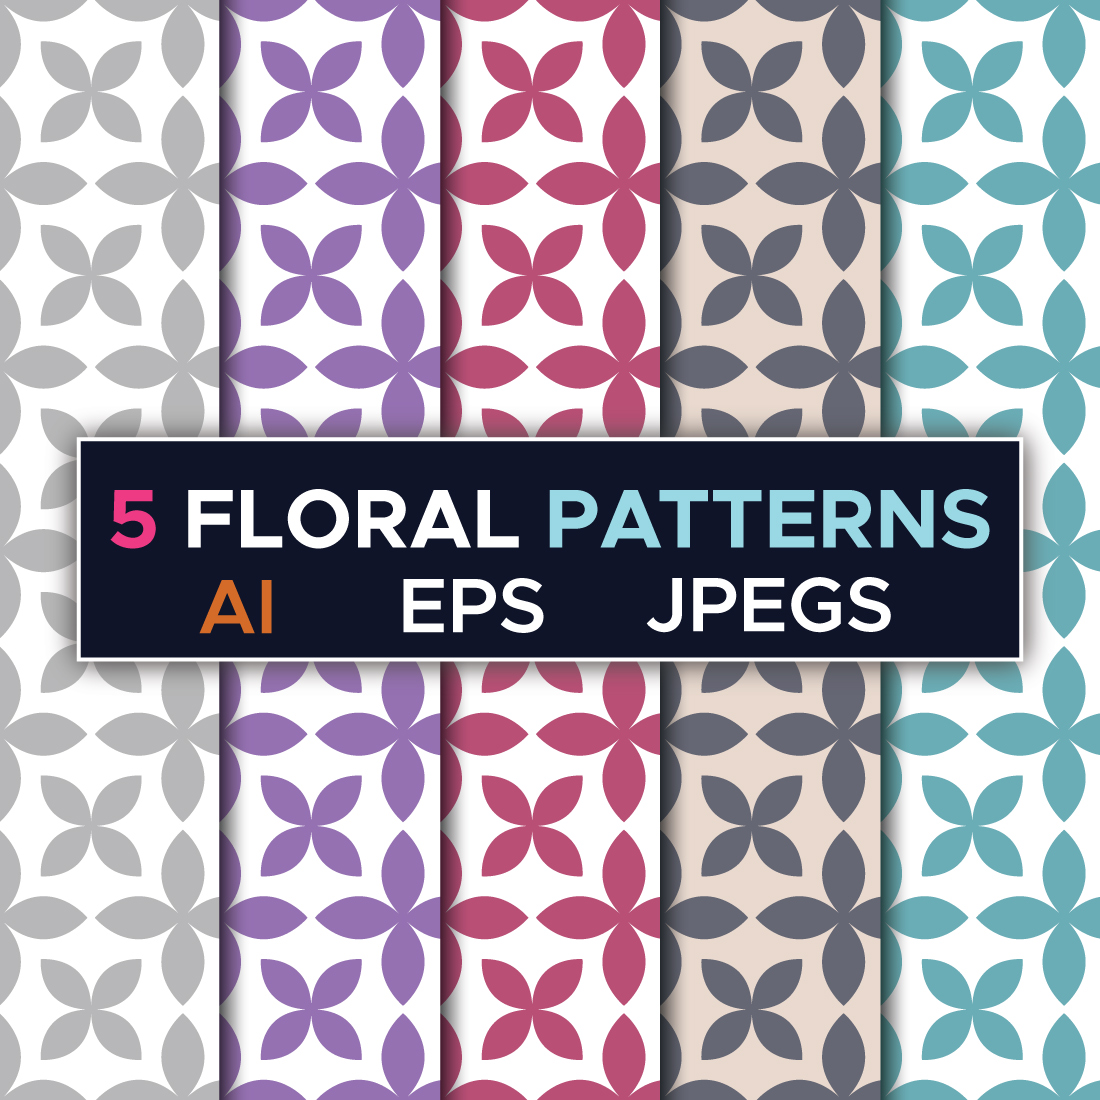 Seamless Floral Patterns Bundle